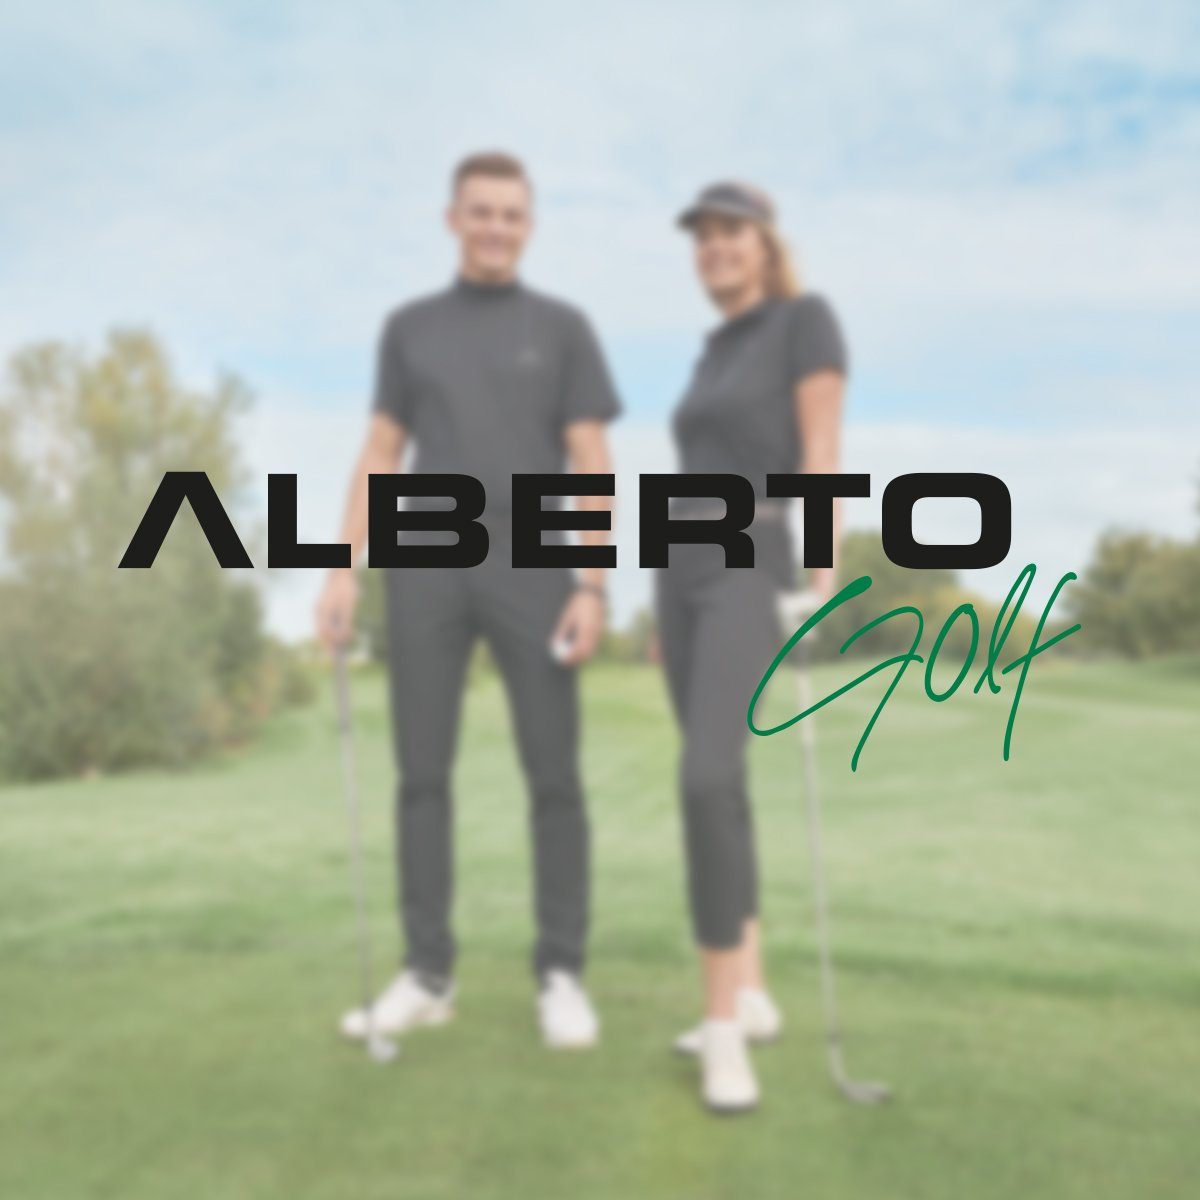 Alberto Earnie 16215751 Shorts Turquoise(861) Golfshorts WR Revolution Herren